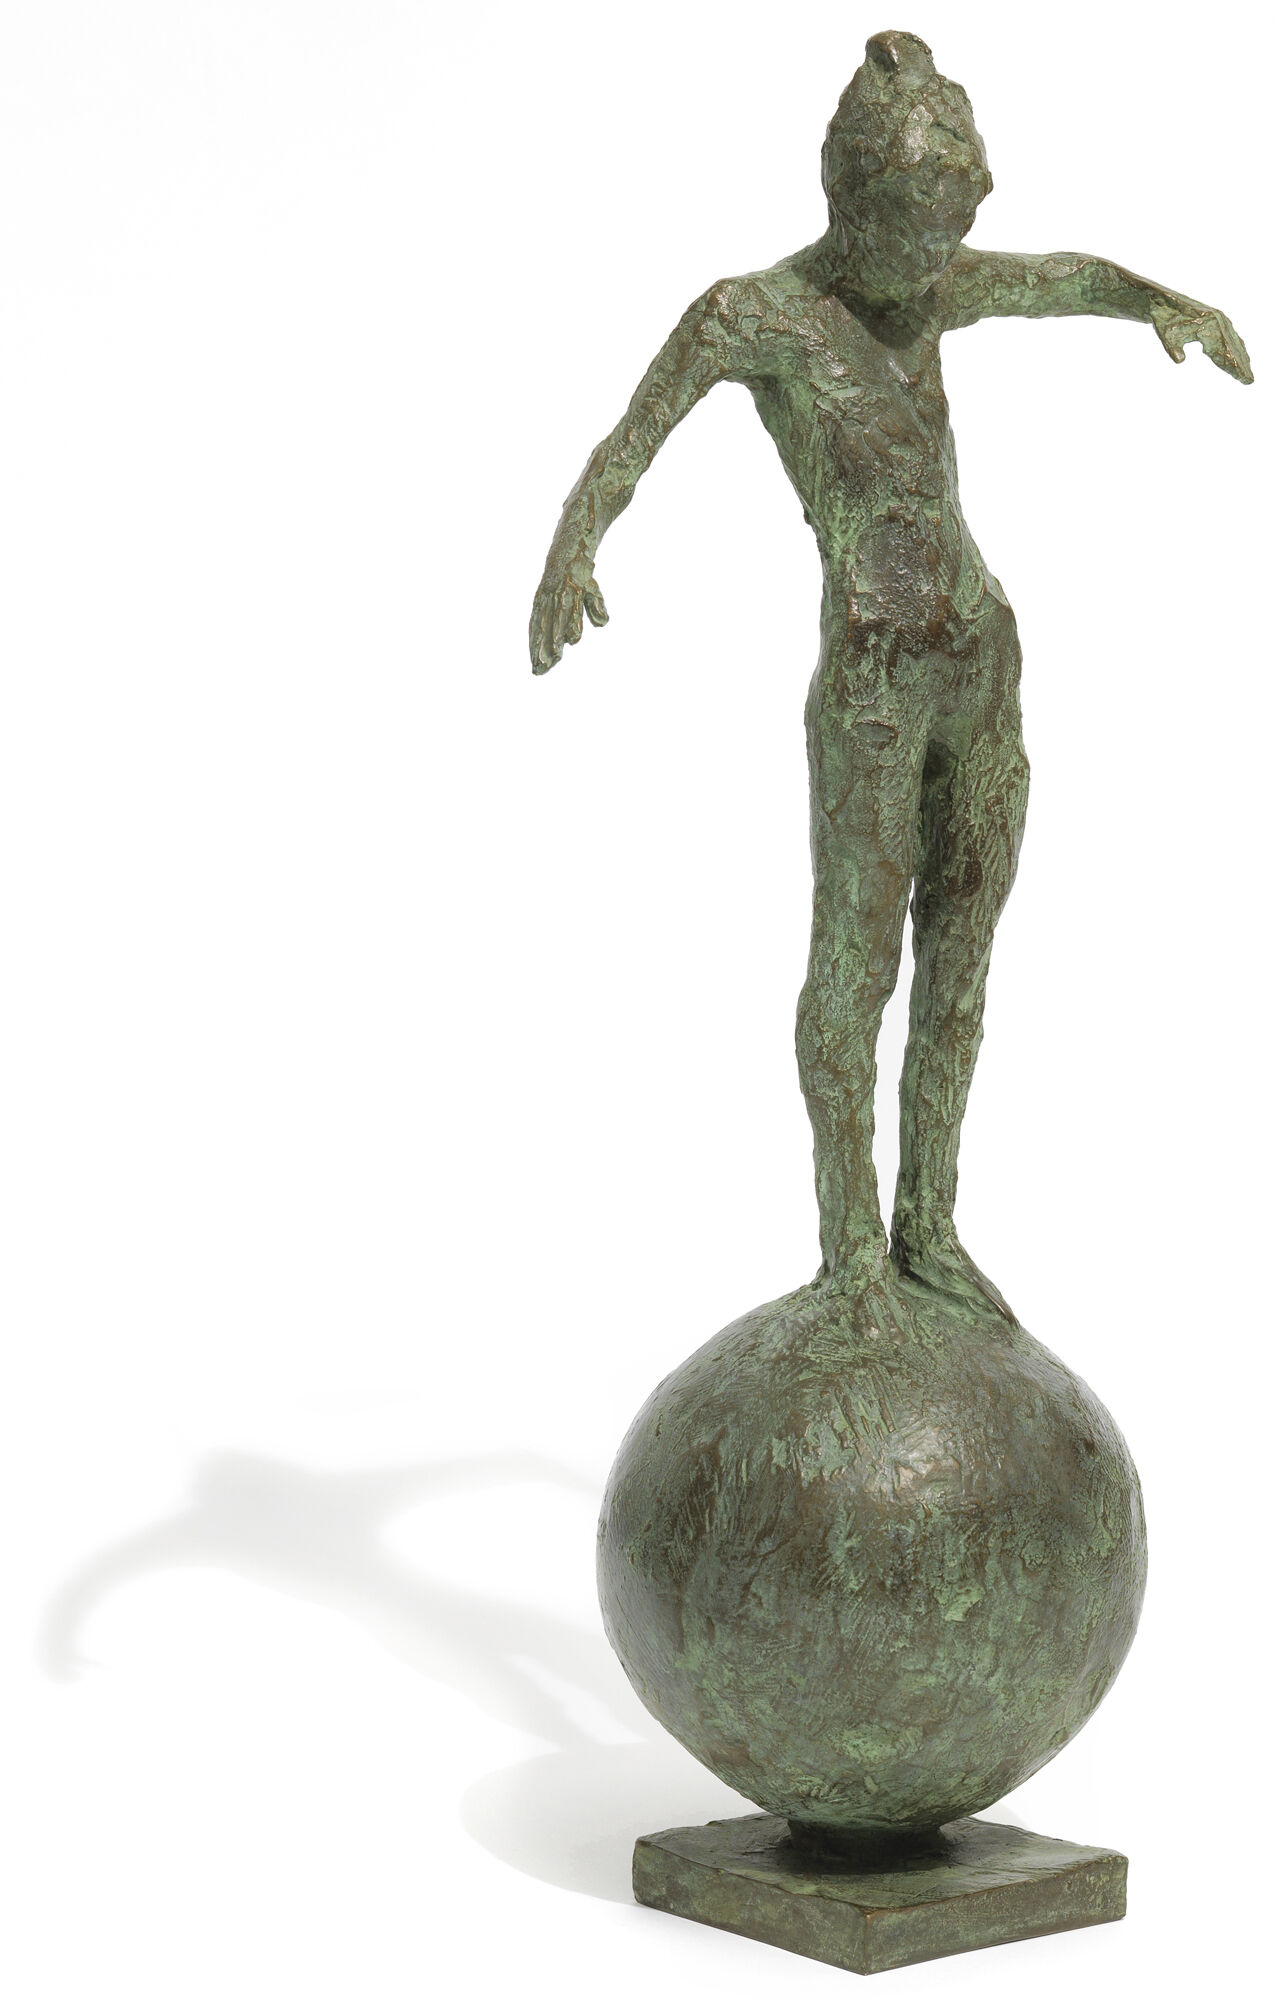 Sculpture "Small Balance" (2016), bronze by Thomas Jastram